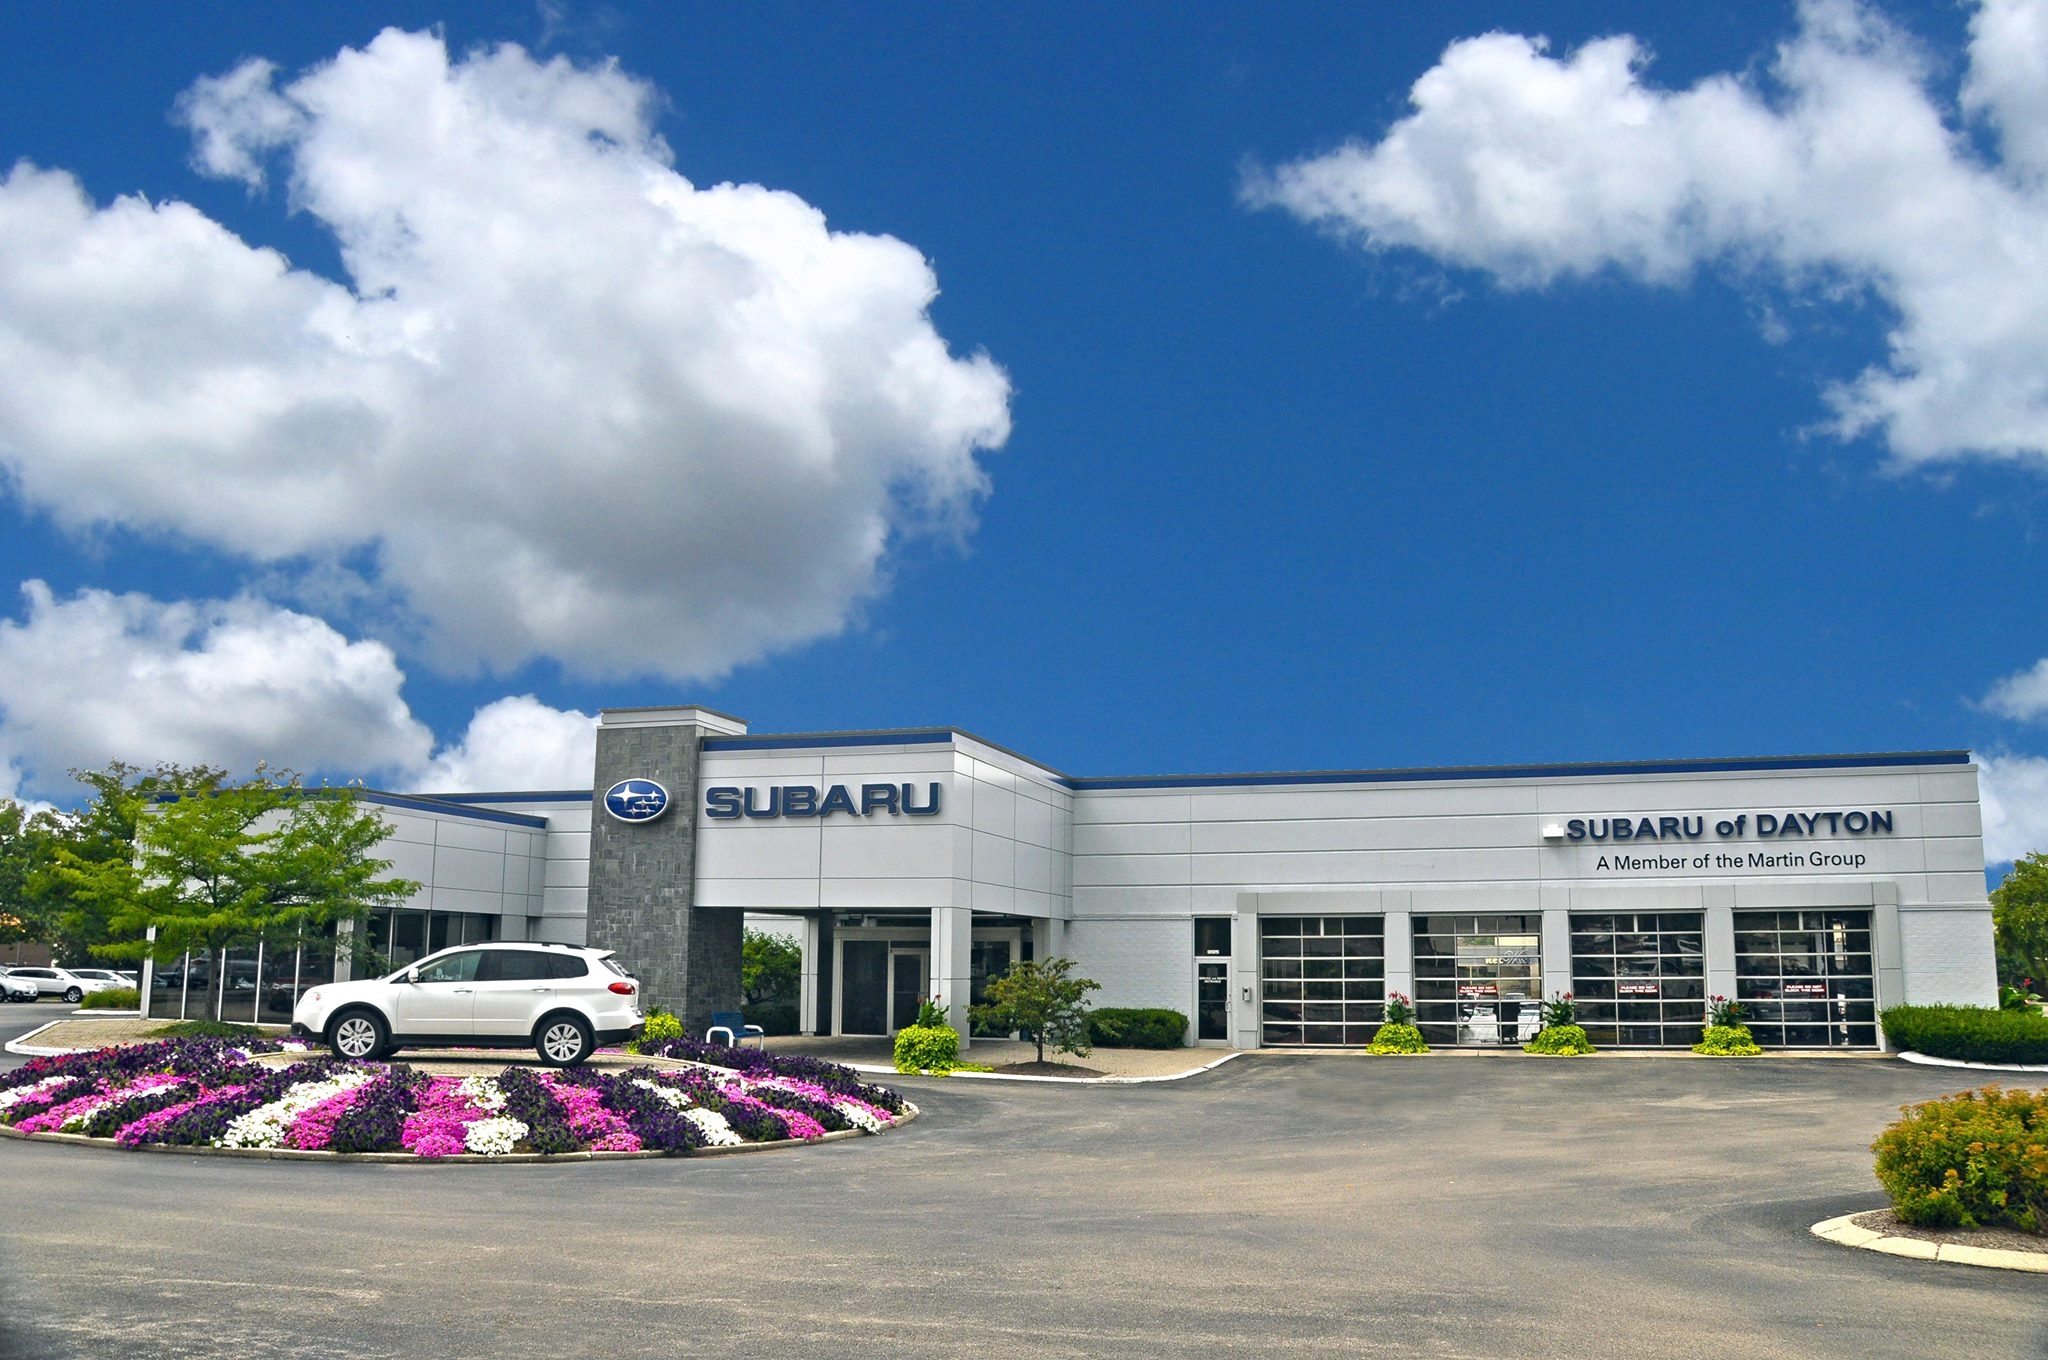 Subaru of Dayton - Front of Building